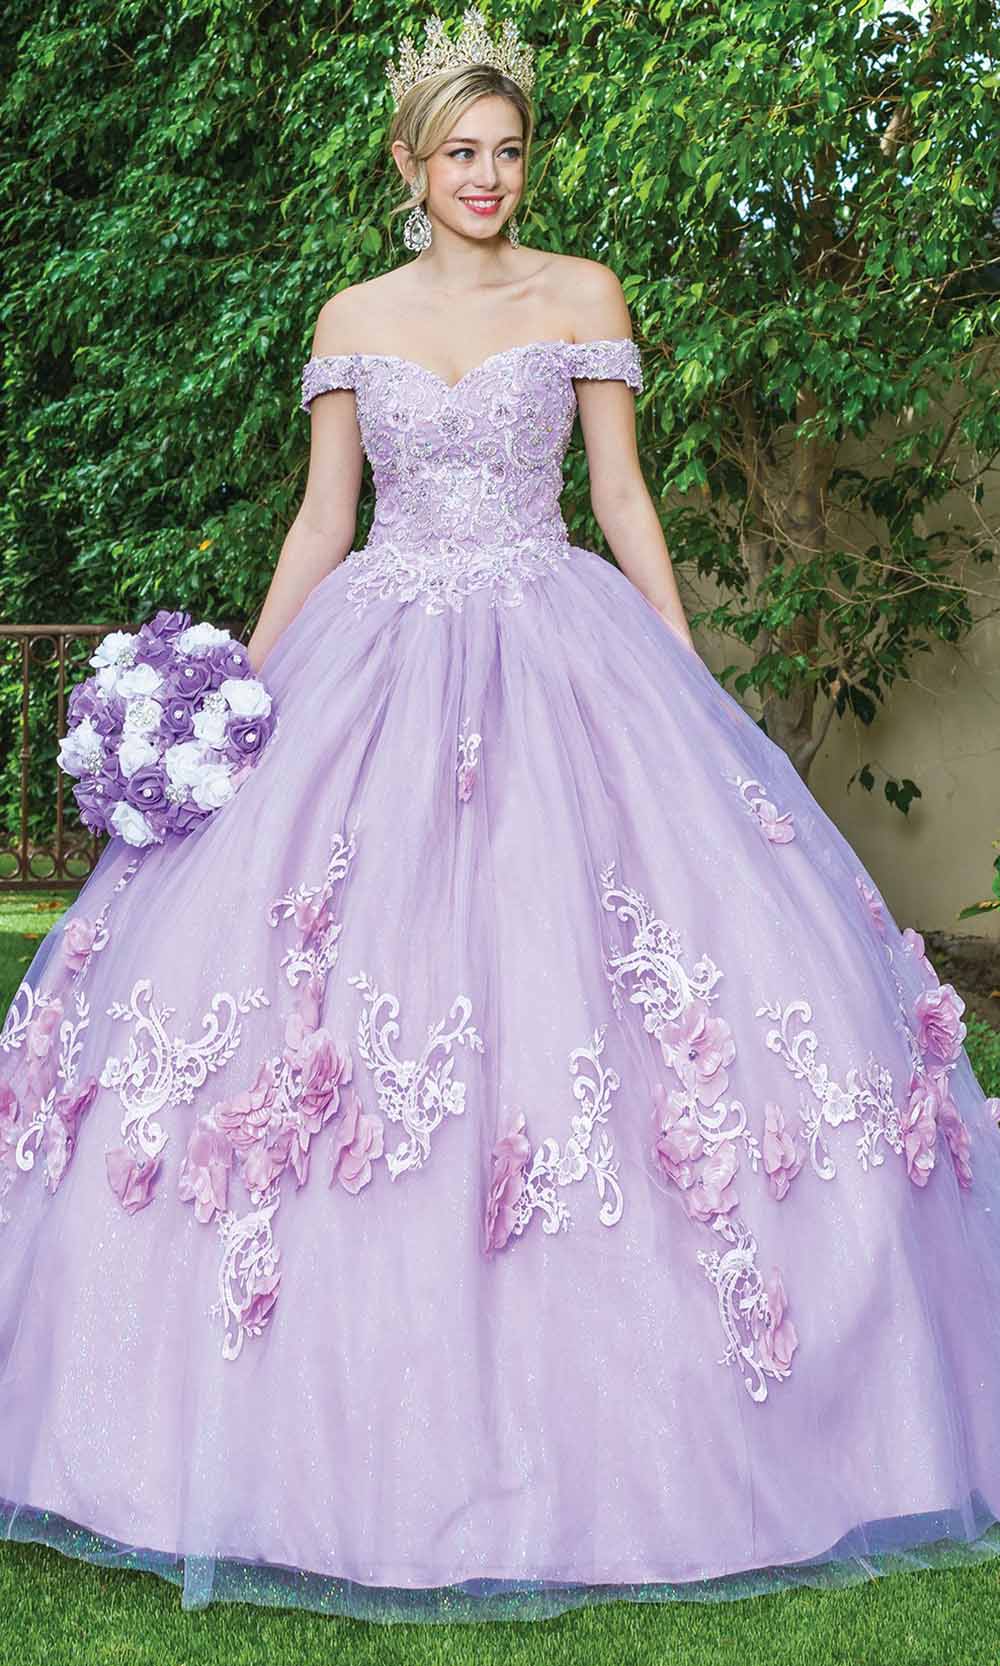 Dancing Queen - 1598 Floral Ornate Glitter Ballgown In Purple